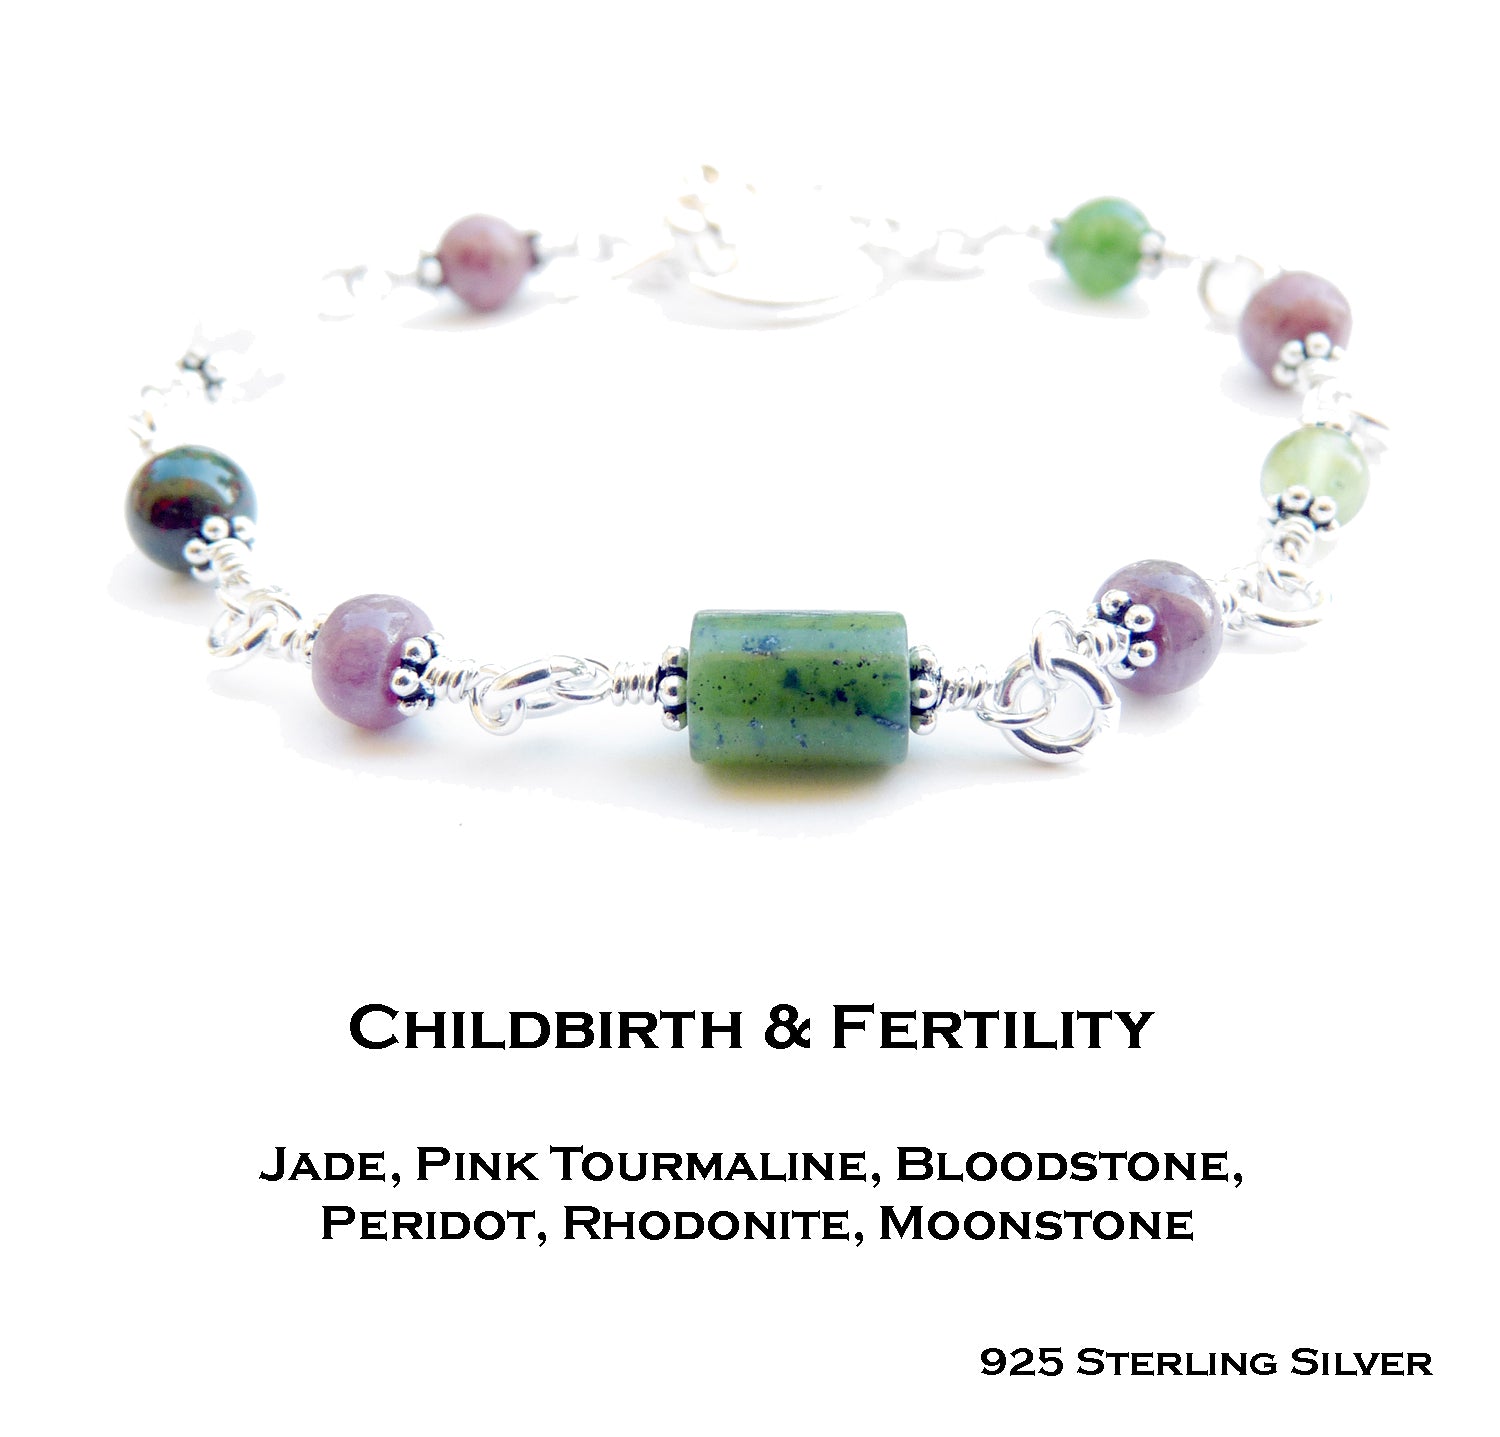 14K GF Gold Fertility, Motherhood, Conception Crystal Bracelet for Women